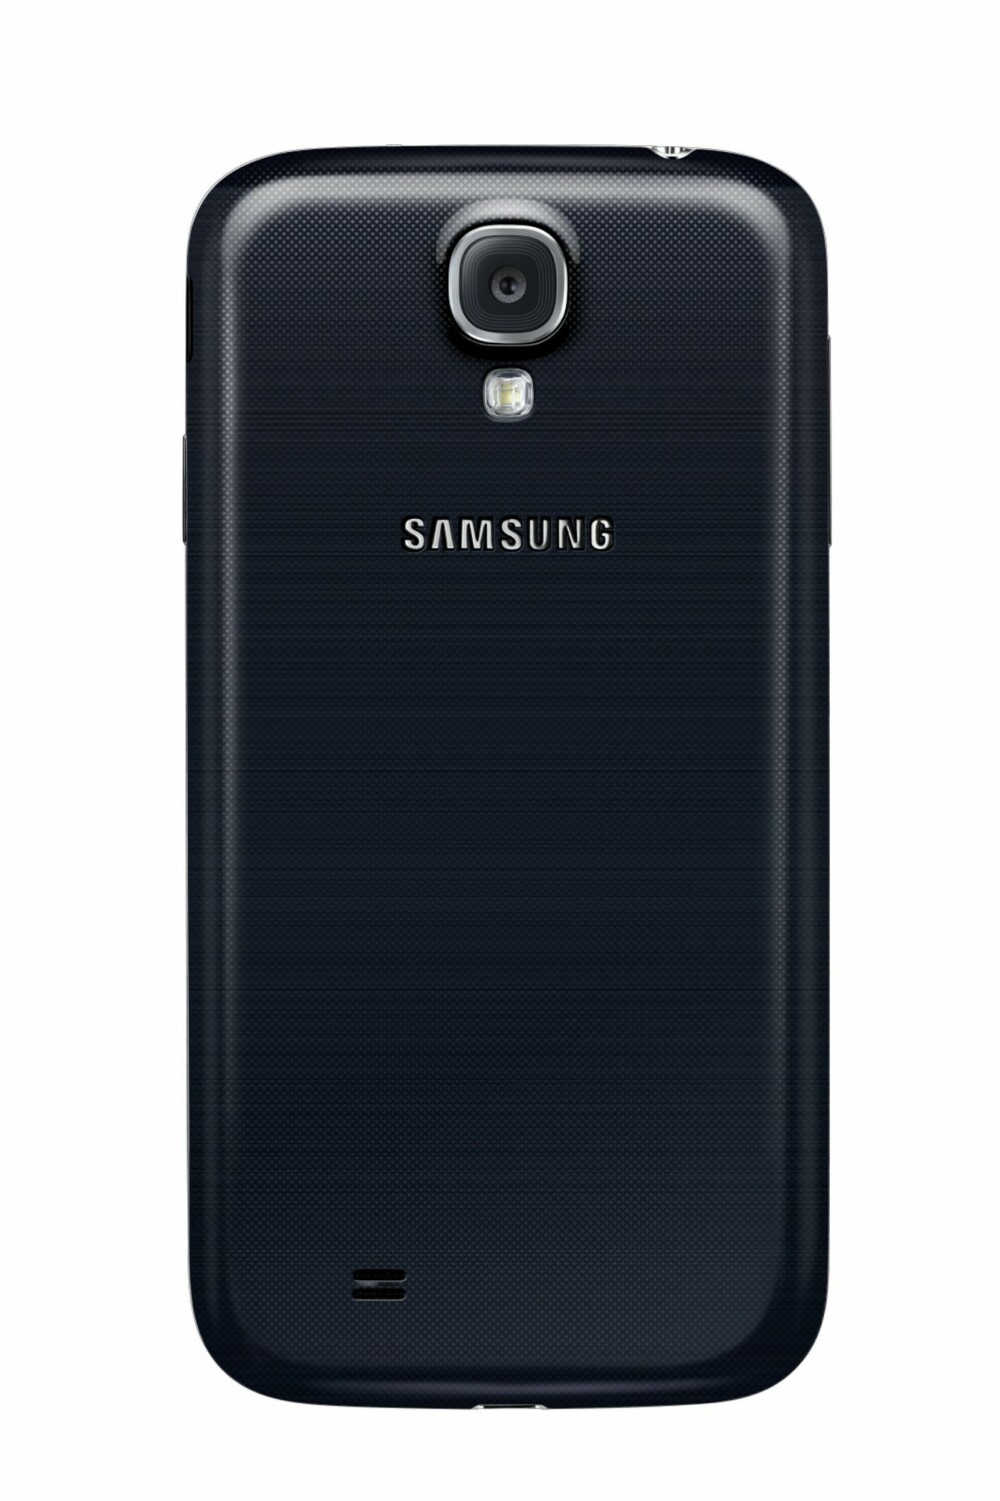 13 MP: Galaxy S4 får et 13 megapiksels kamera. Ansiktskameraet blir på 2 megapiksels.